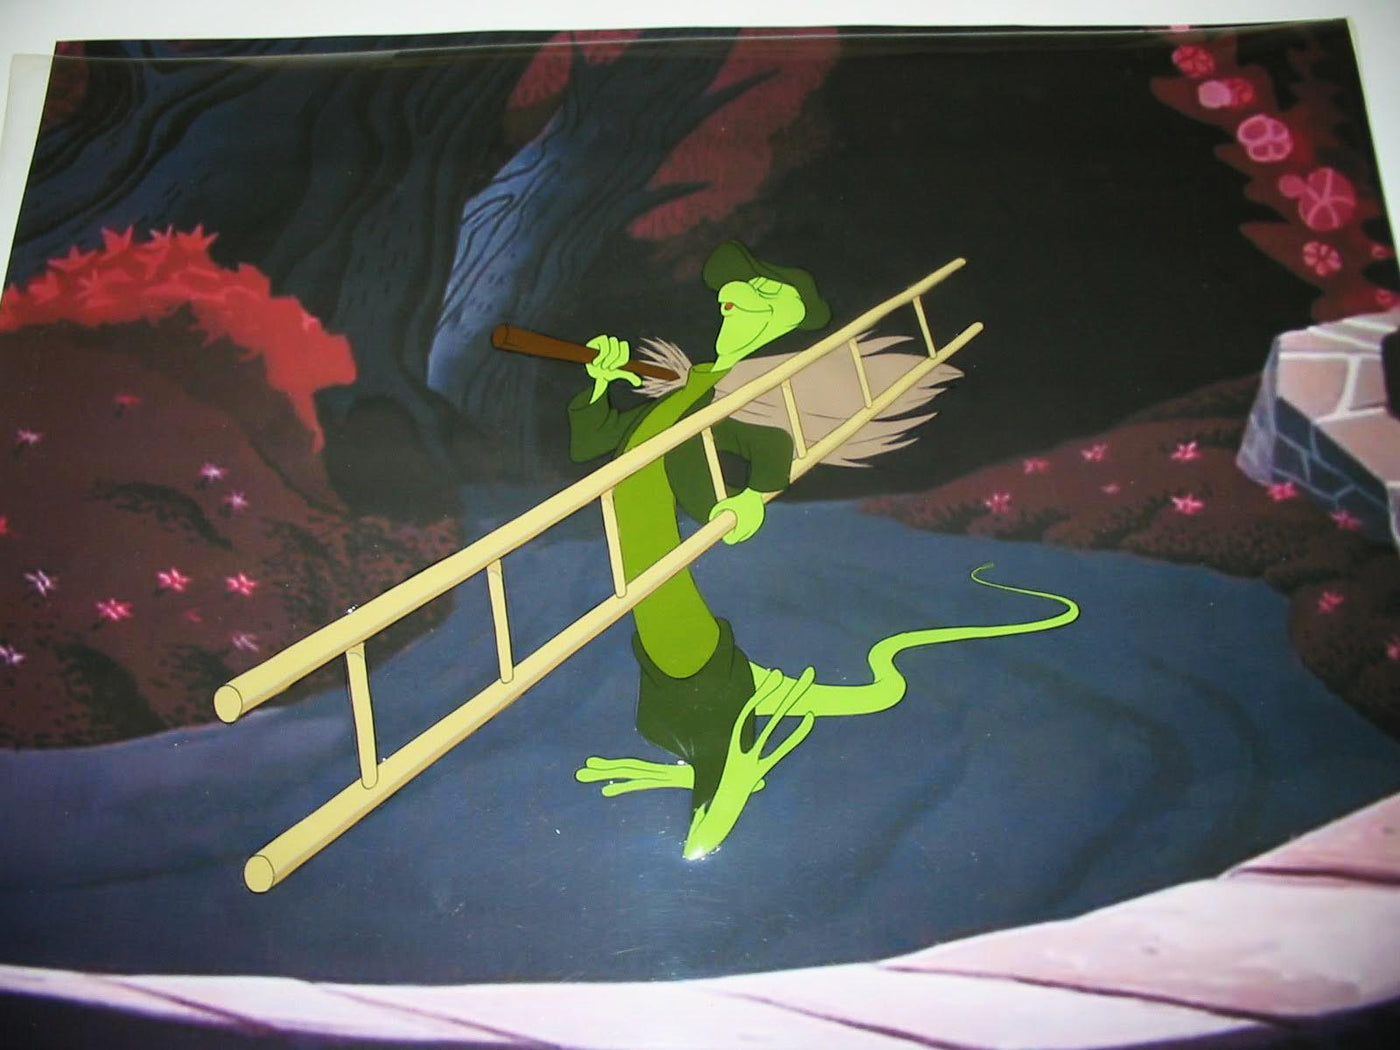 Original Walt Disney Production Cel from Alice in Wonderland Featuring Bill The Lizard